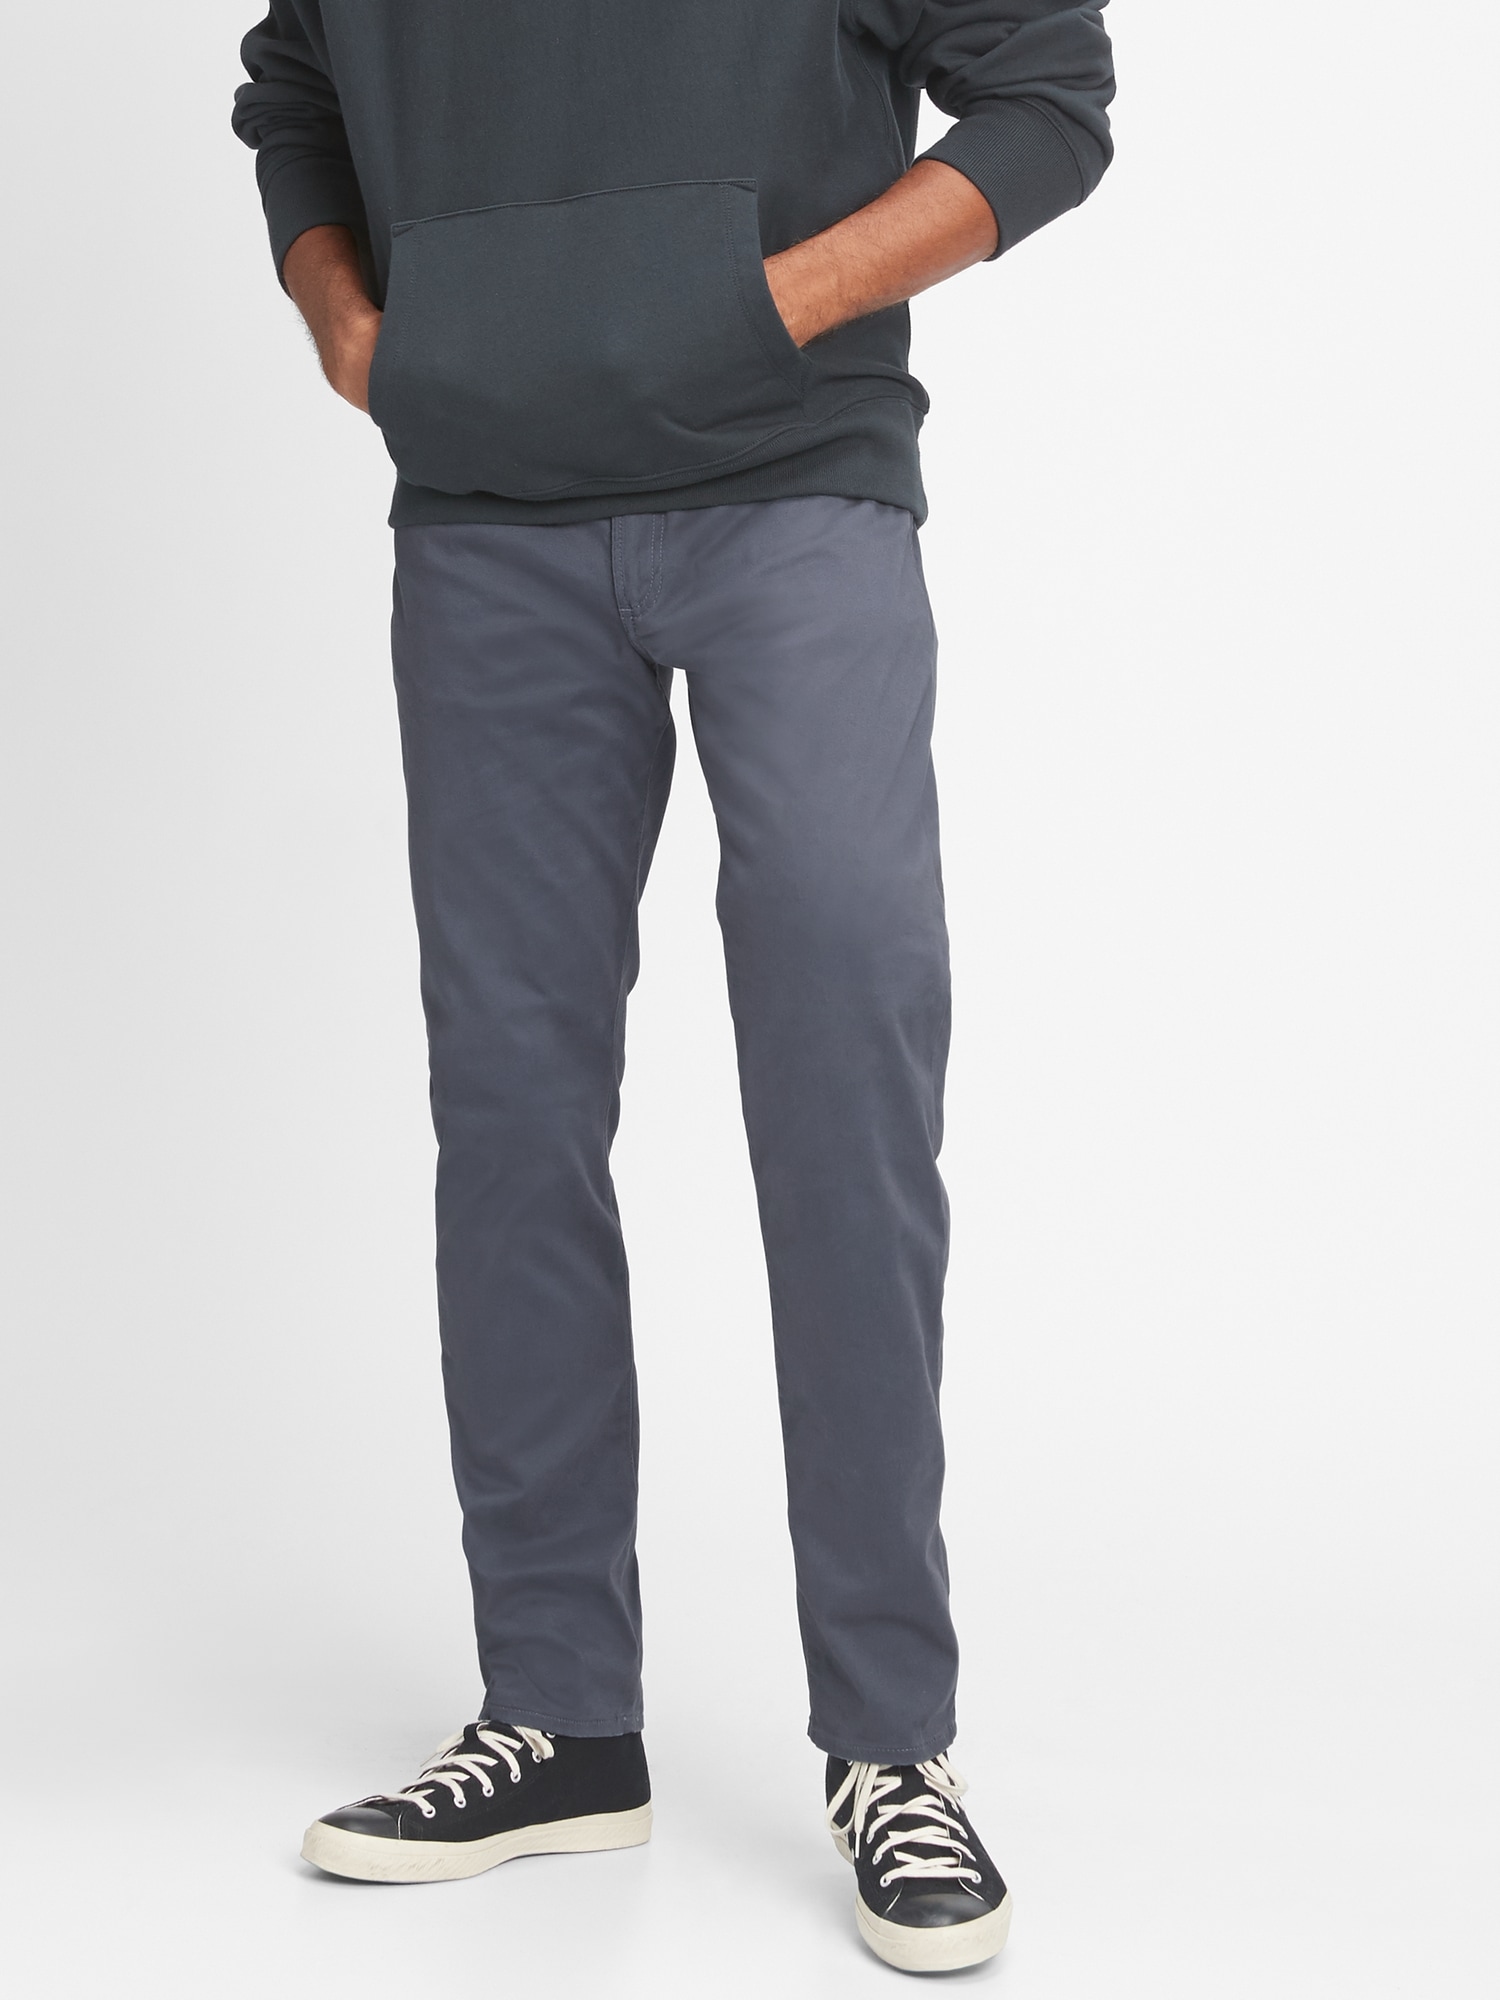 GAP Soft Wear Slim Fit Jeans para hombre, gris oscuro 007, 32W x 30L US :  Precio Guatemala